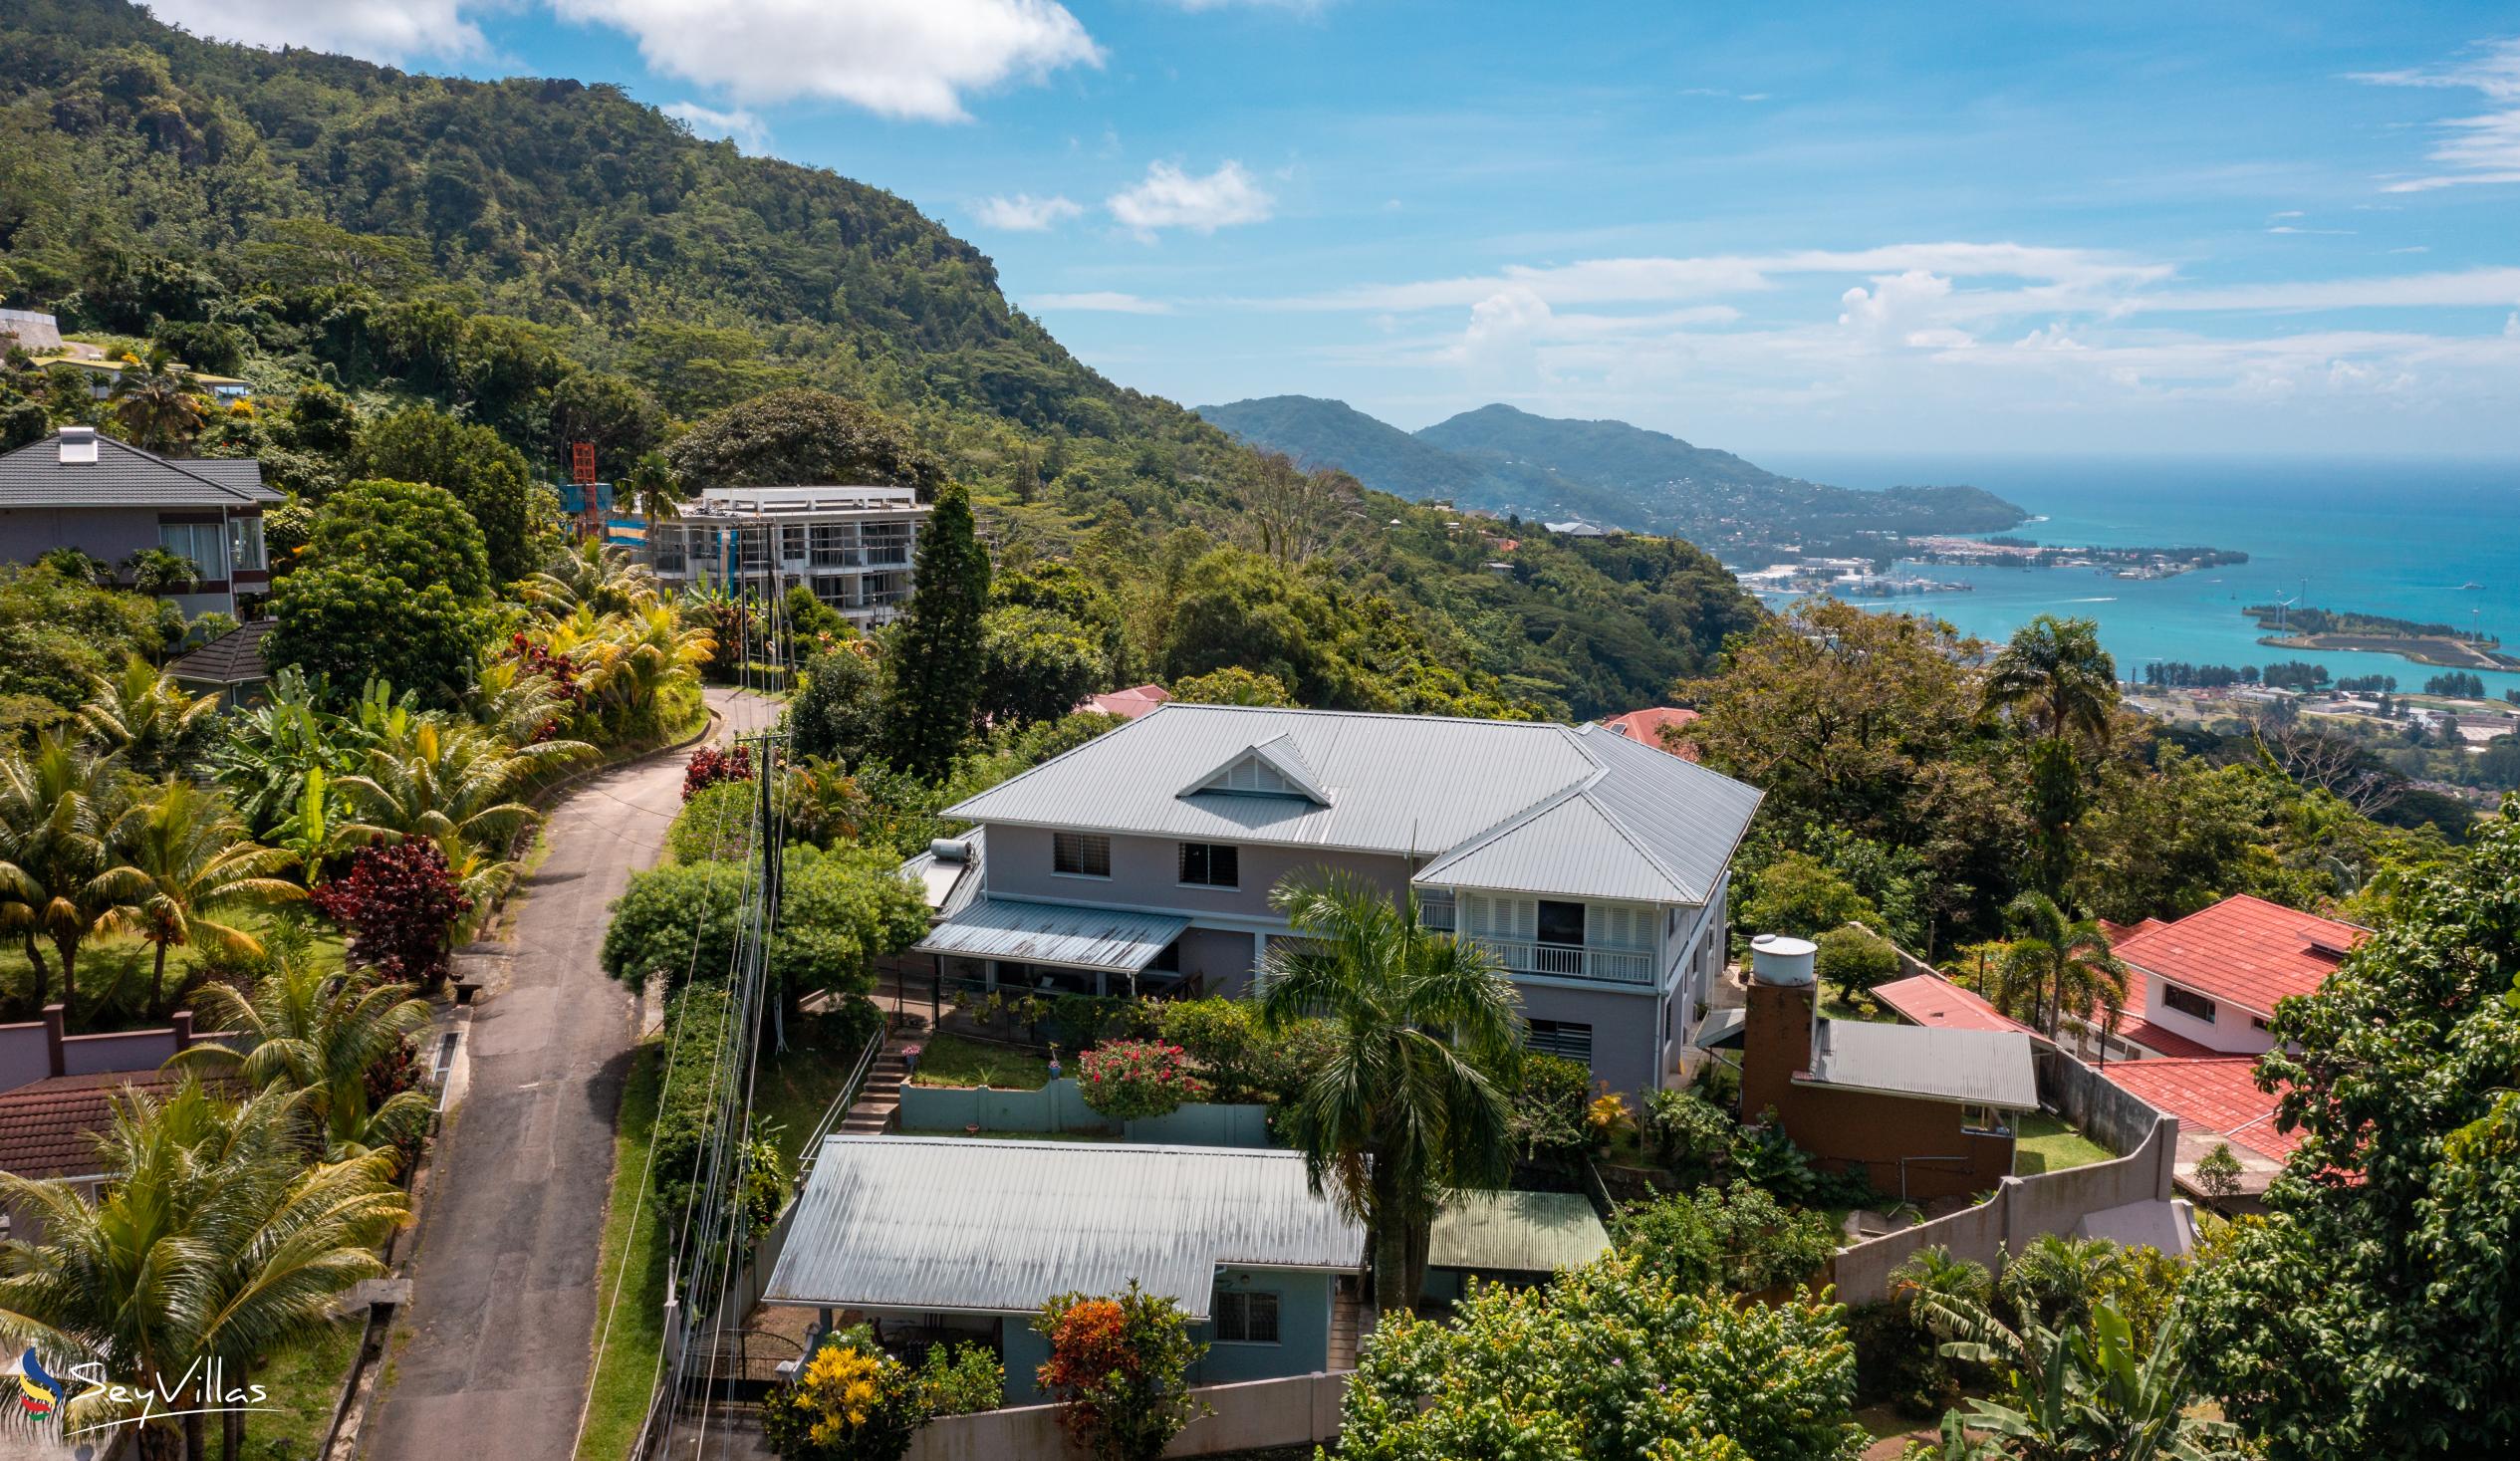 Foto 36: Cliffhanger Villas - Posizione - Mahé (Seychelles)